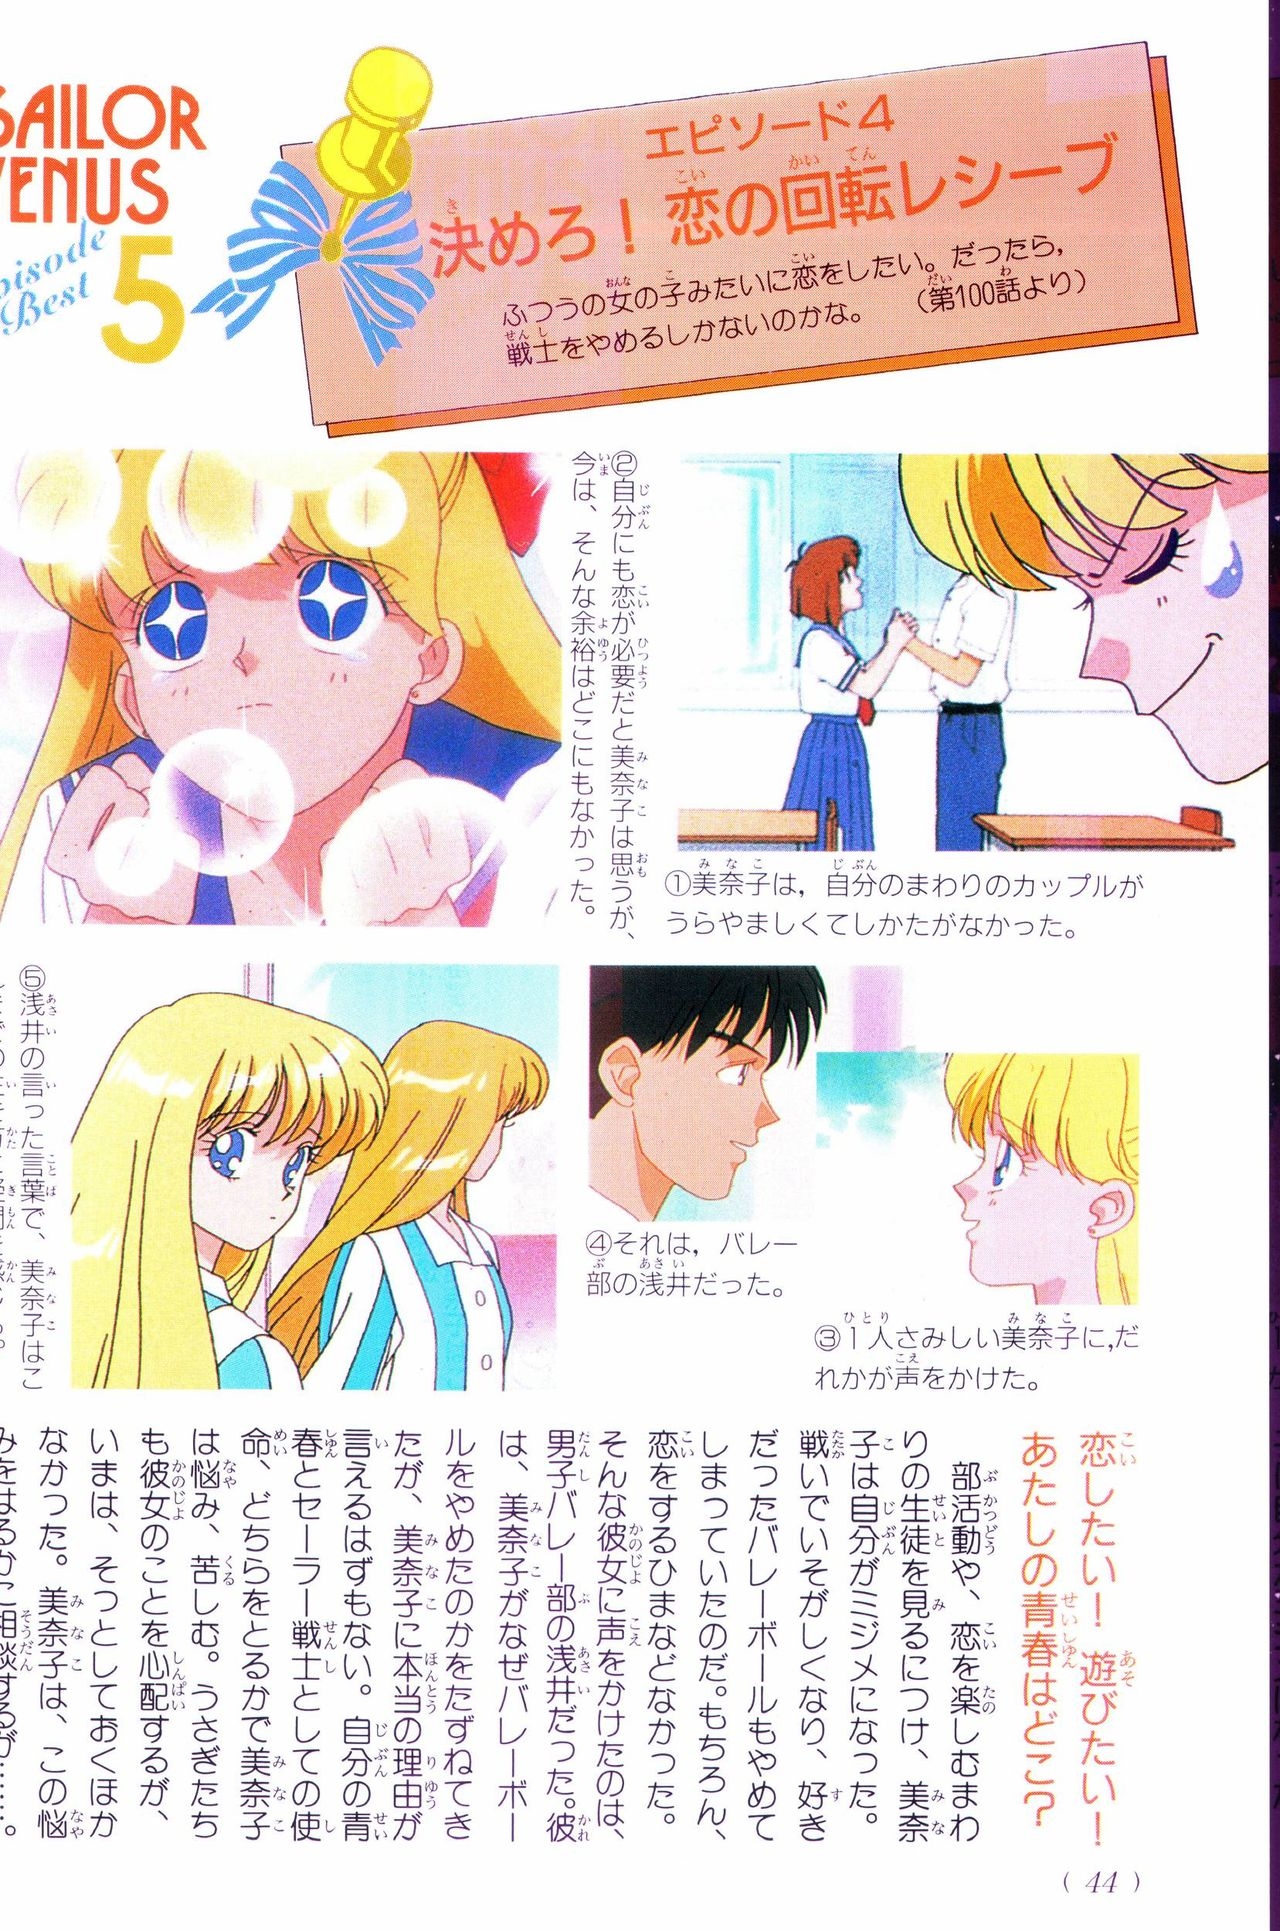 Sailor Moon Official Fan Book - Sailor Venus 50